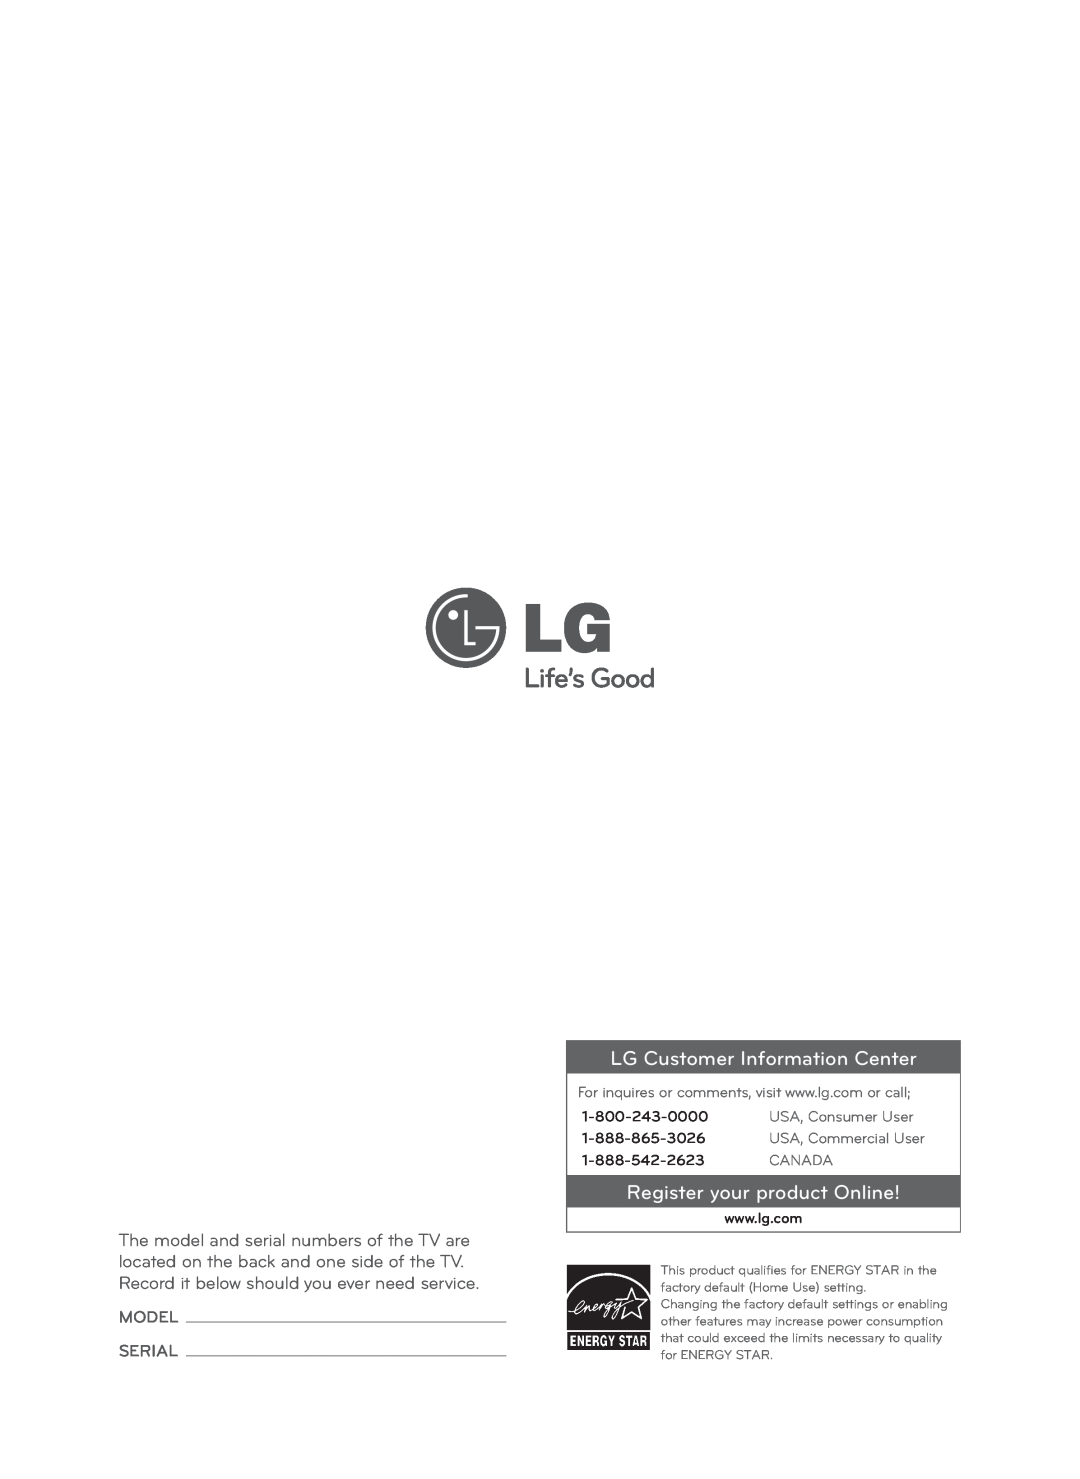 LG Electronics 60LN5400 LG Customer Information Center, Register your product Online, Model Serial, USA, Consumer User 